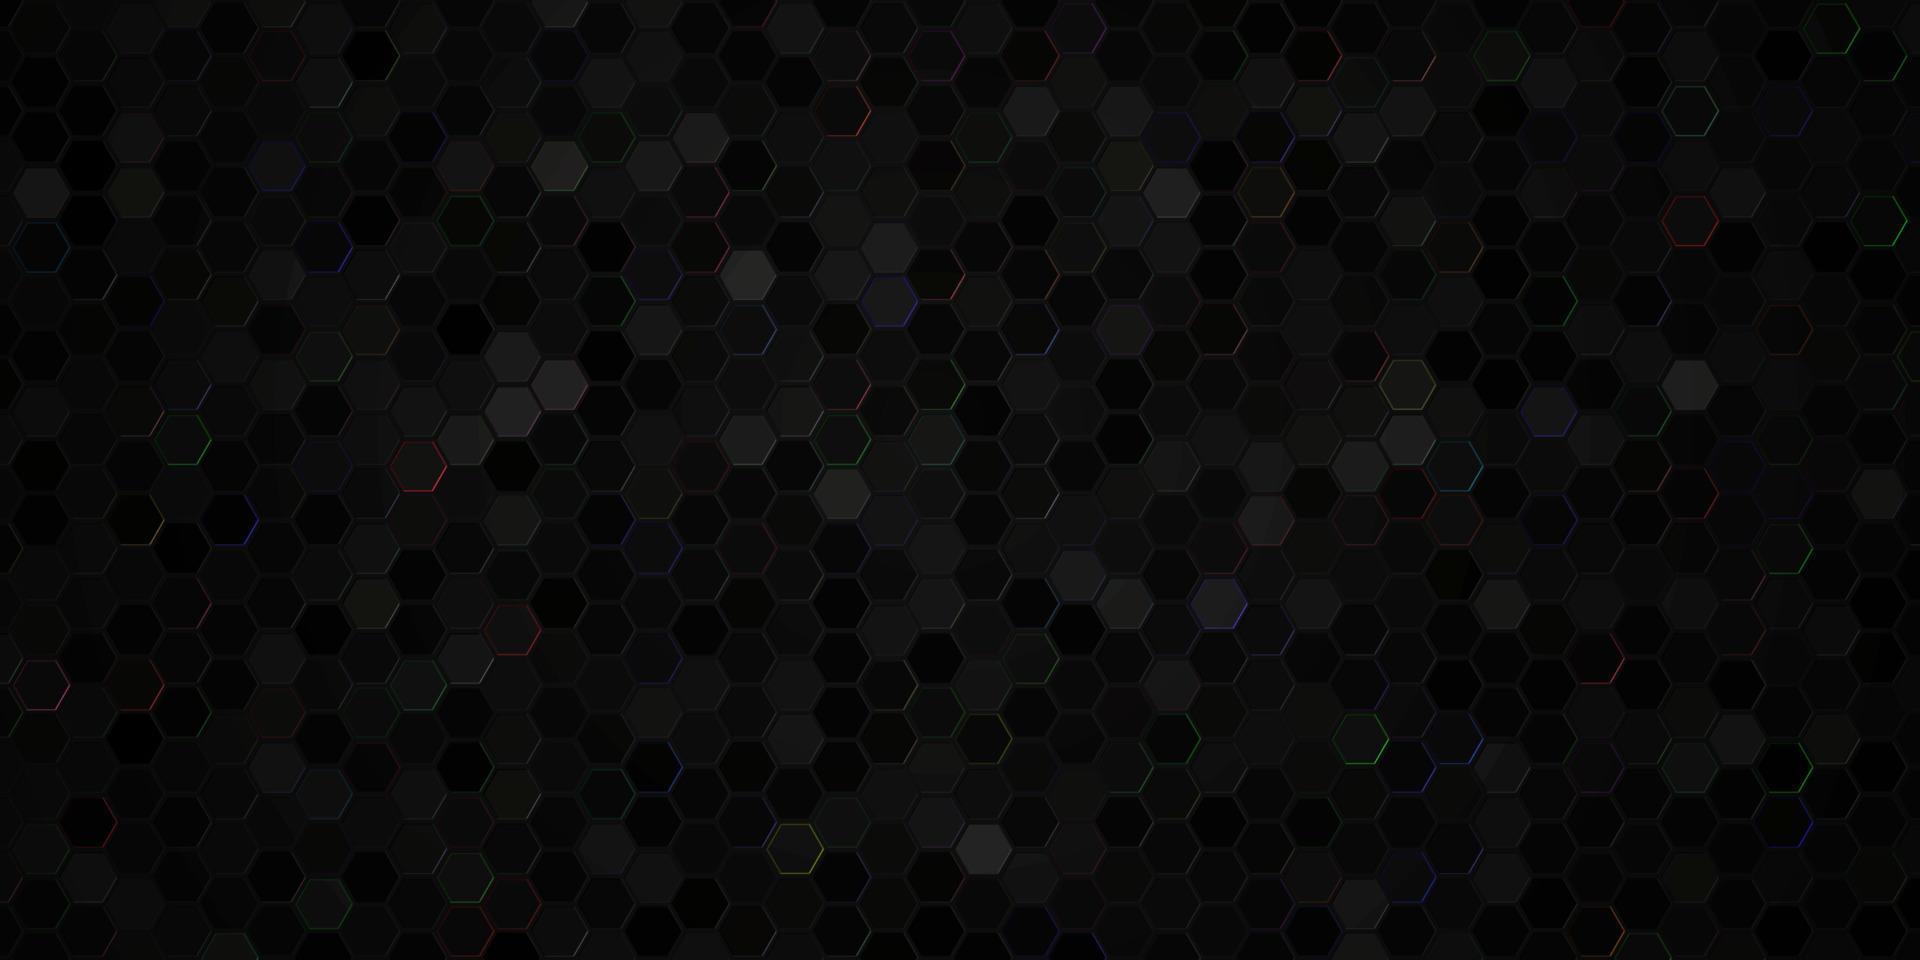 banner de venta, afiche, diseño de volante con un colorido patrón hexagonal sobre fondo negro oscuro. plantilla de fondo de diseño moderno para anuncios publicitarios, sociales y de moda vector